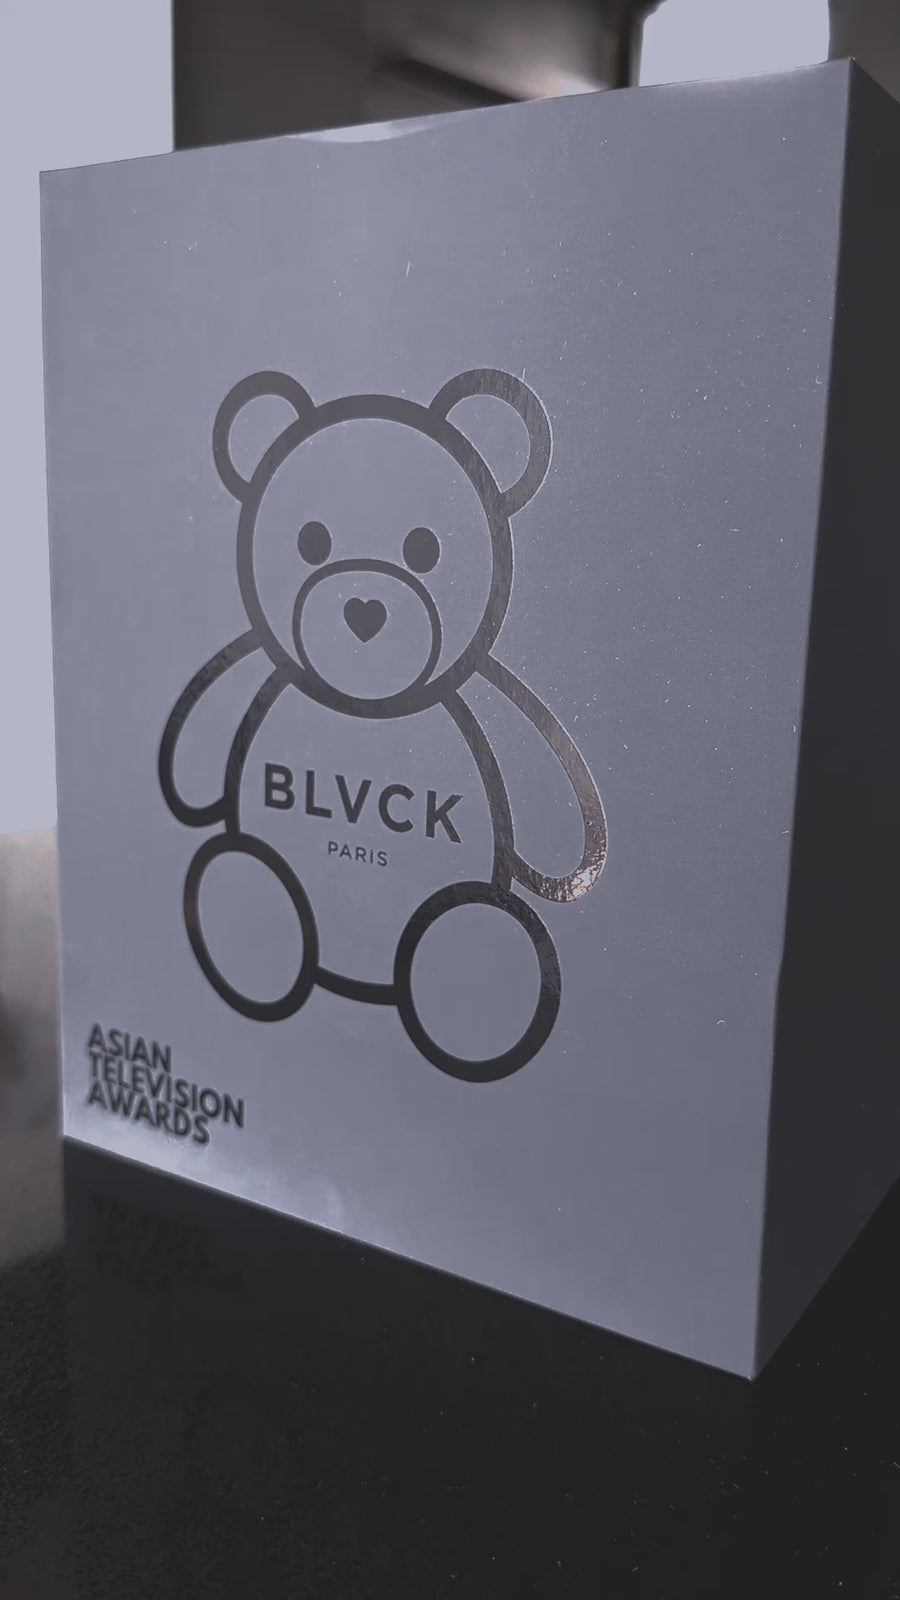 'Blvck x Asian TV Awards' Teddy Bear